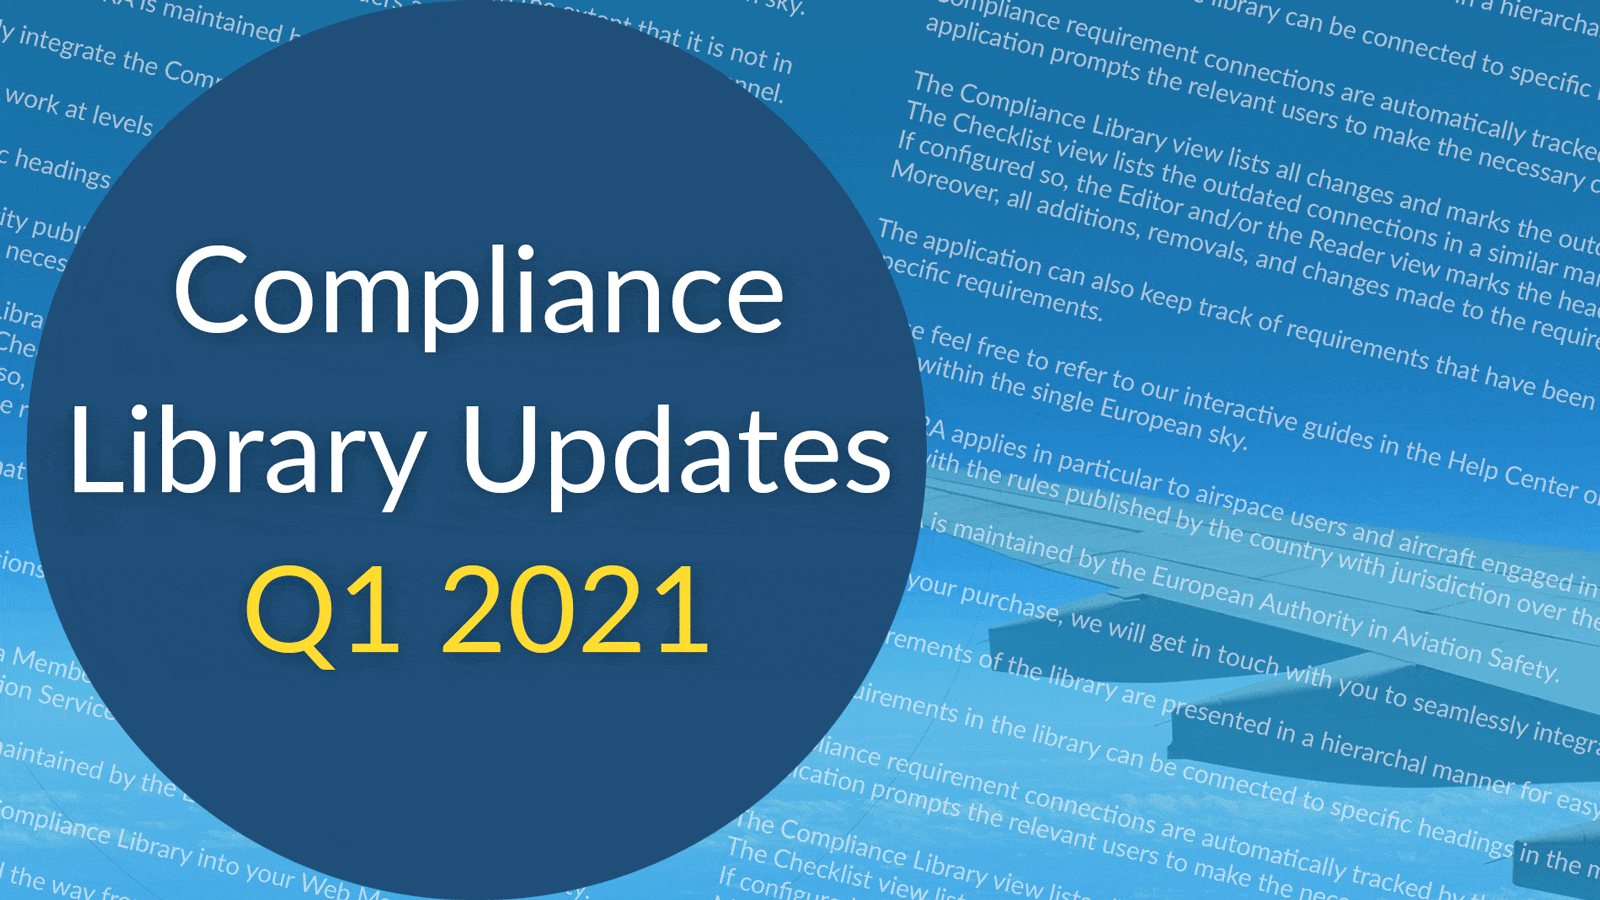 Web Manuals compliance libraries update Q1 2021